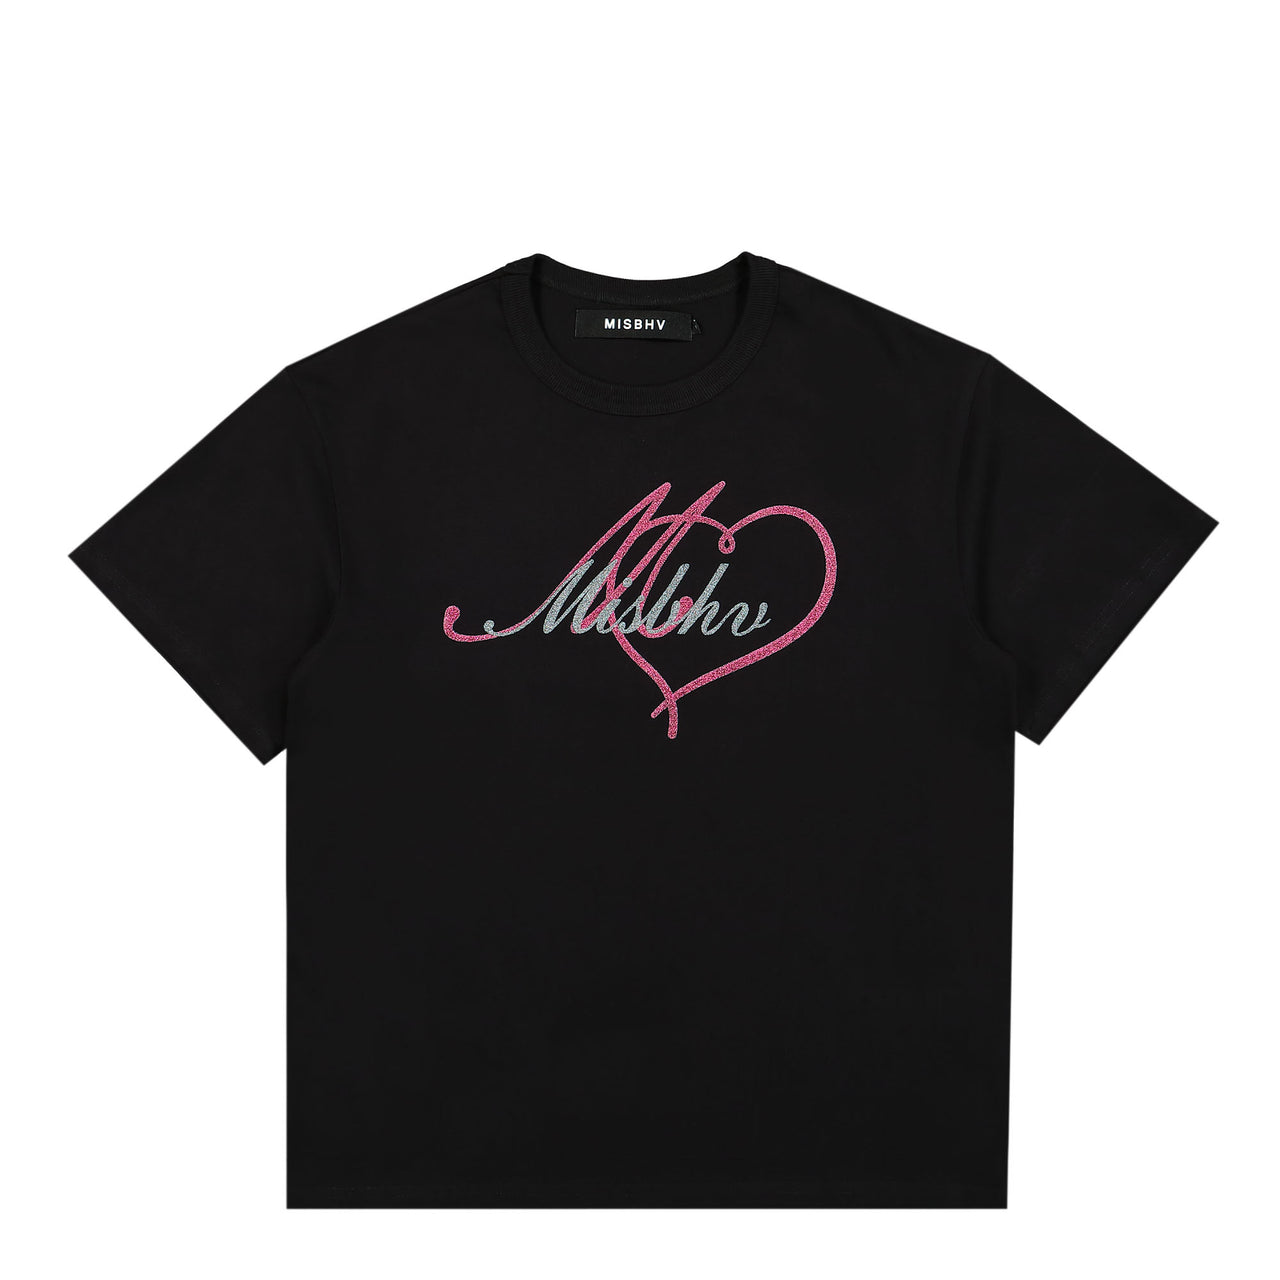 I Love Misbhv T-Shirt